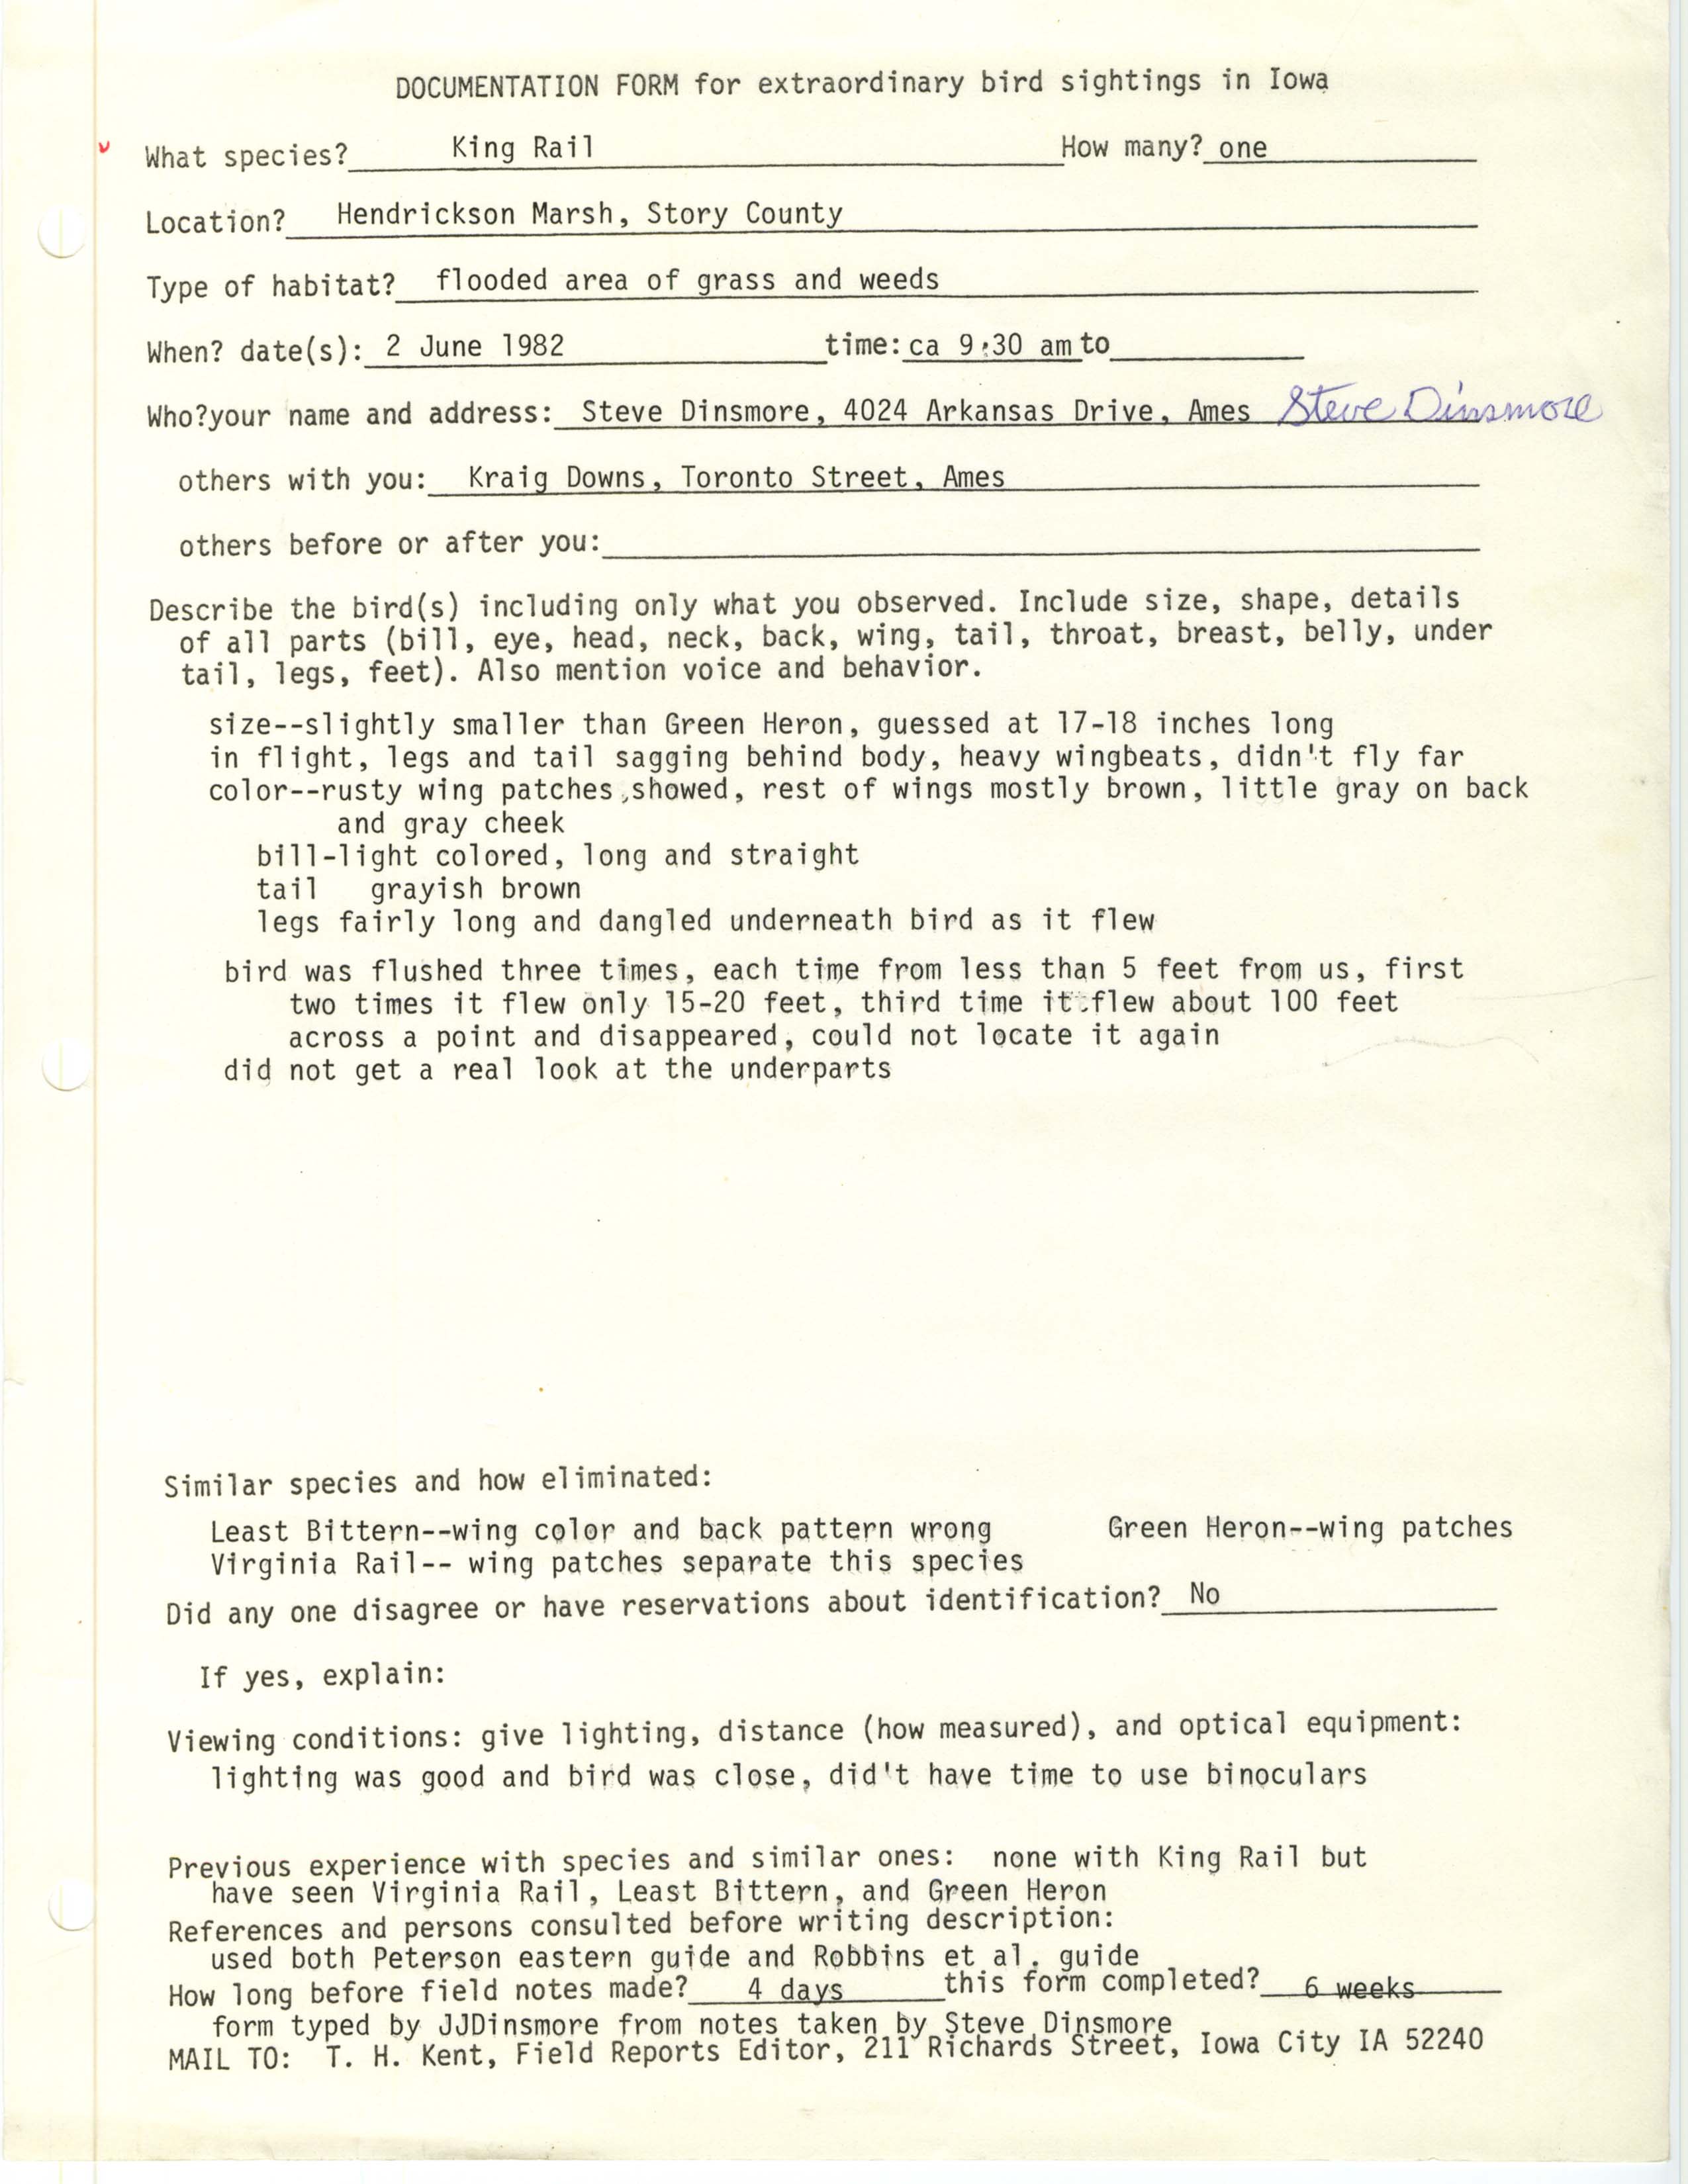 Rare bird documentation form for King Rail at Hendrickson Marsh, 1982